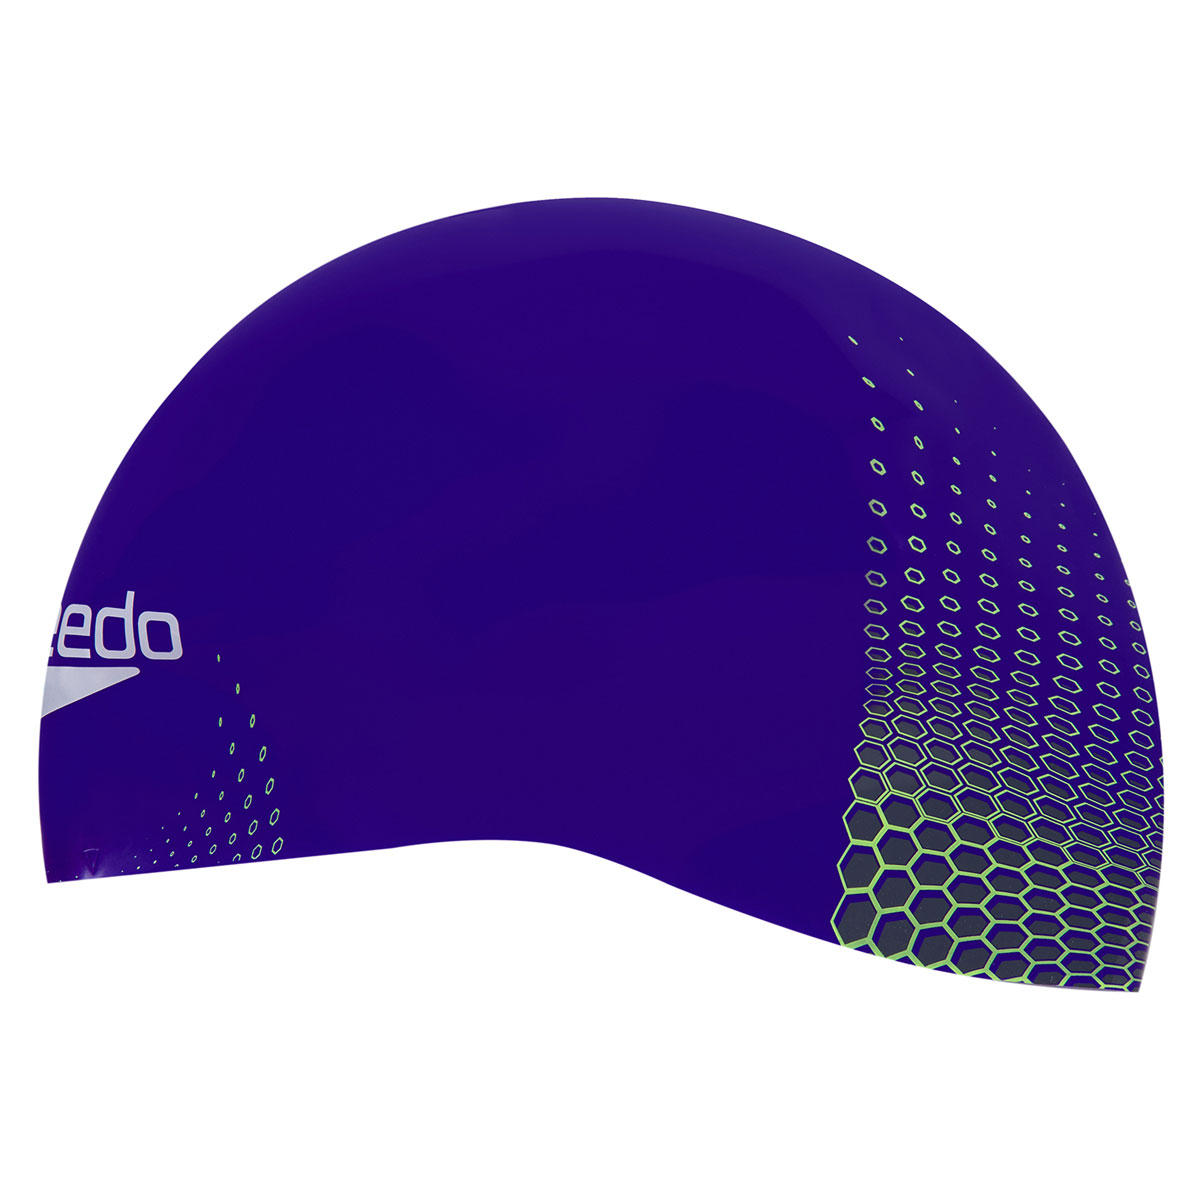 Speedo Fastskin Cap - Violet/Fluro Yellow/Oxide Grey